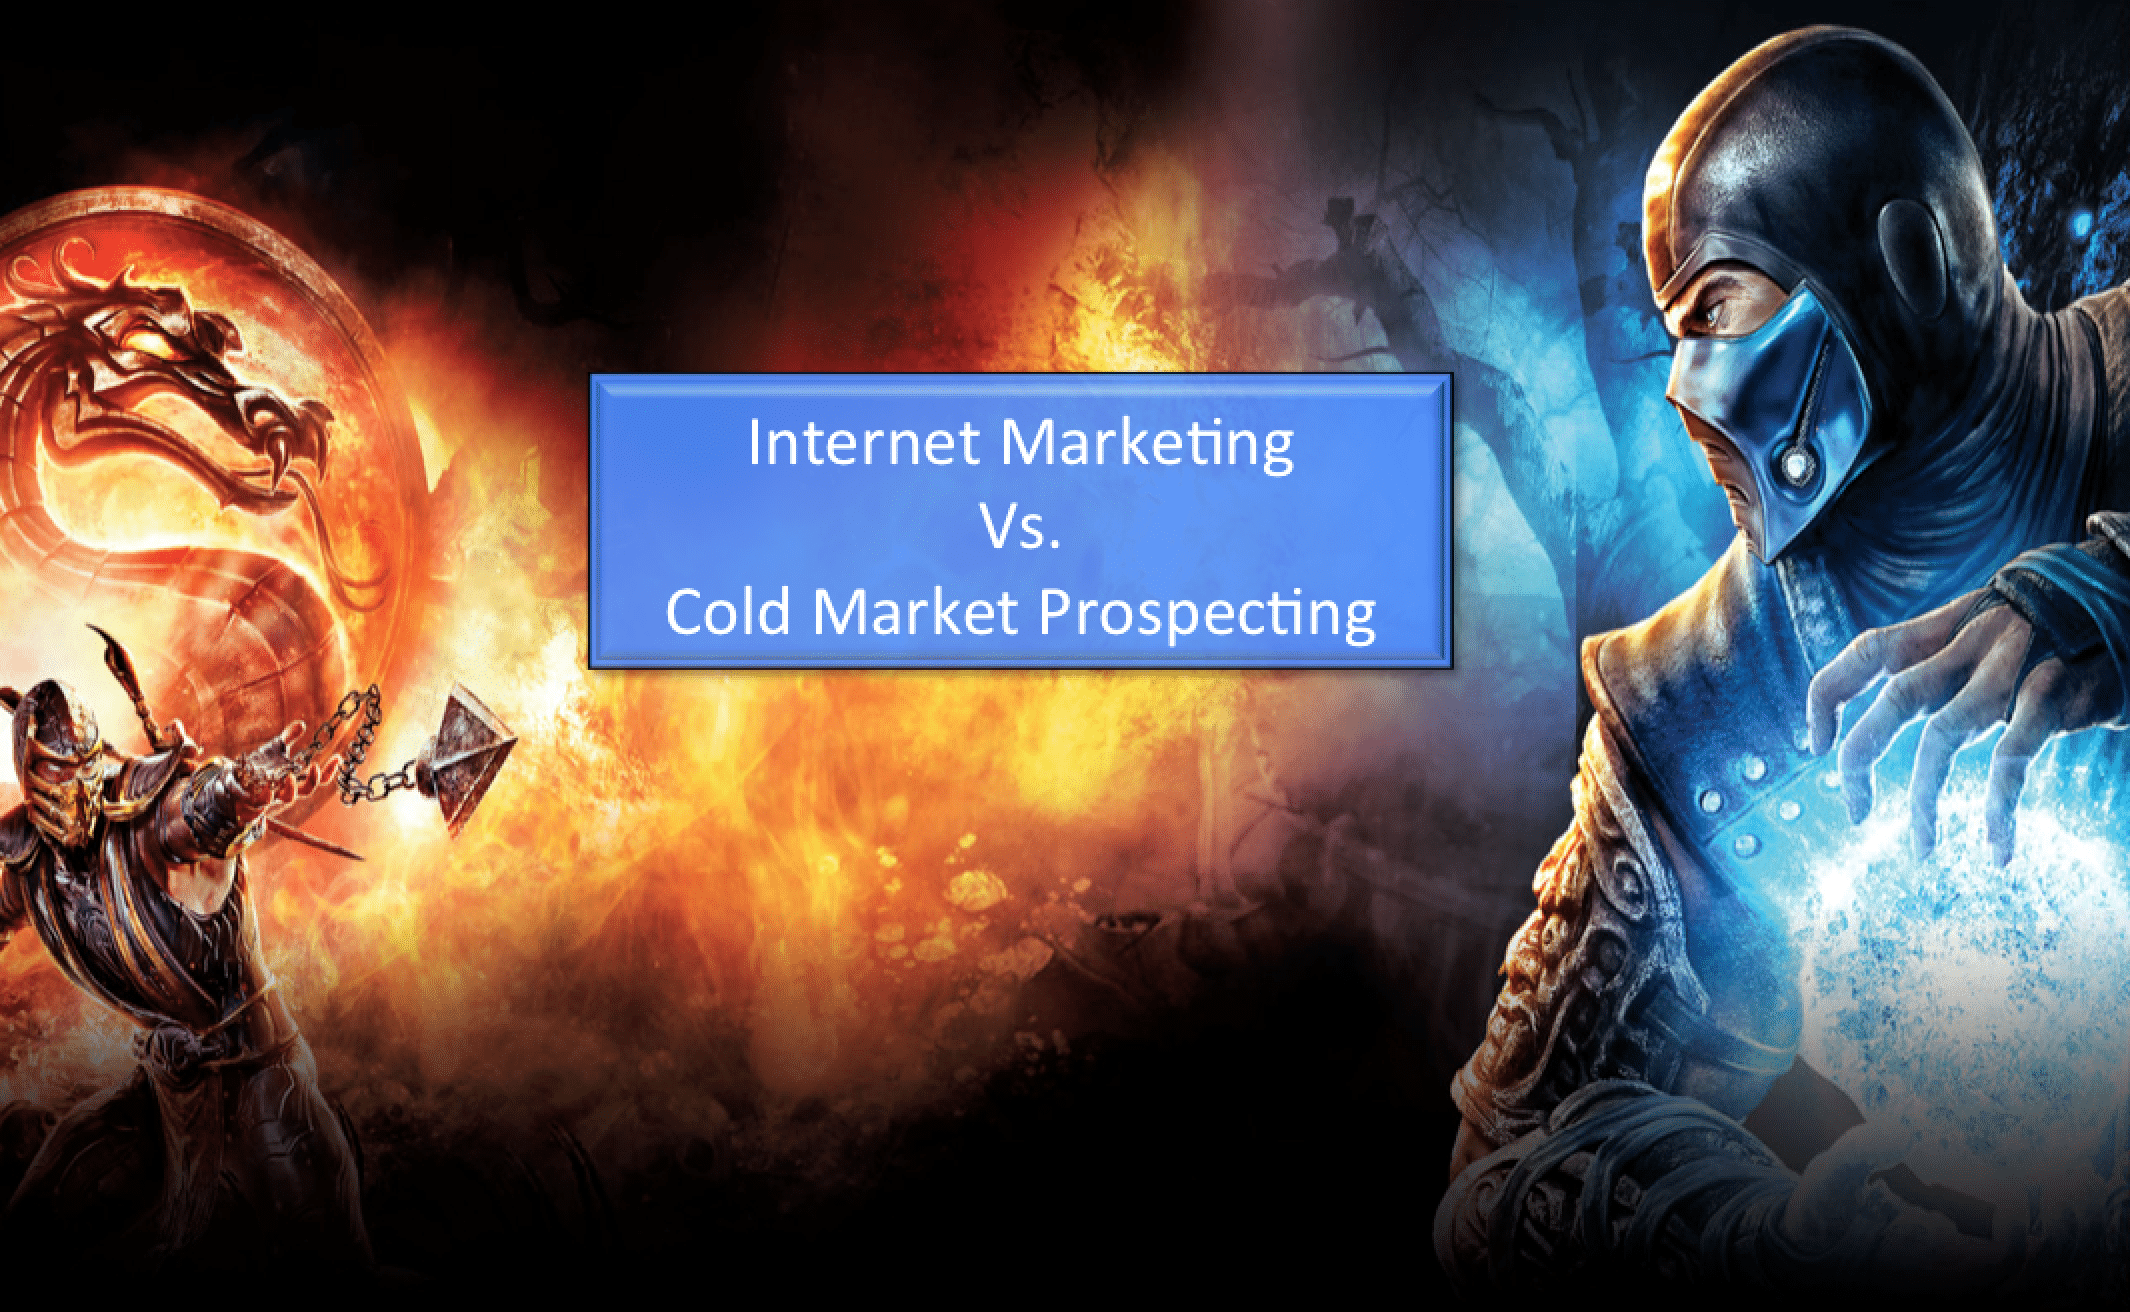 Cold Market Prospecting vs. Internet Marketing